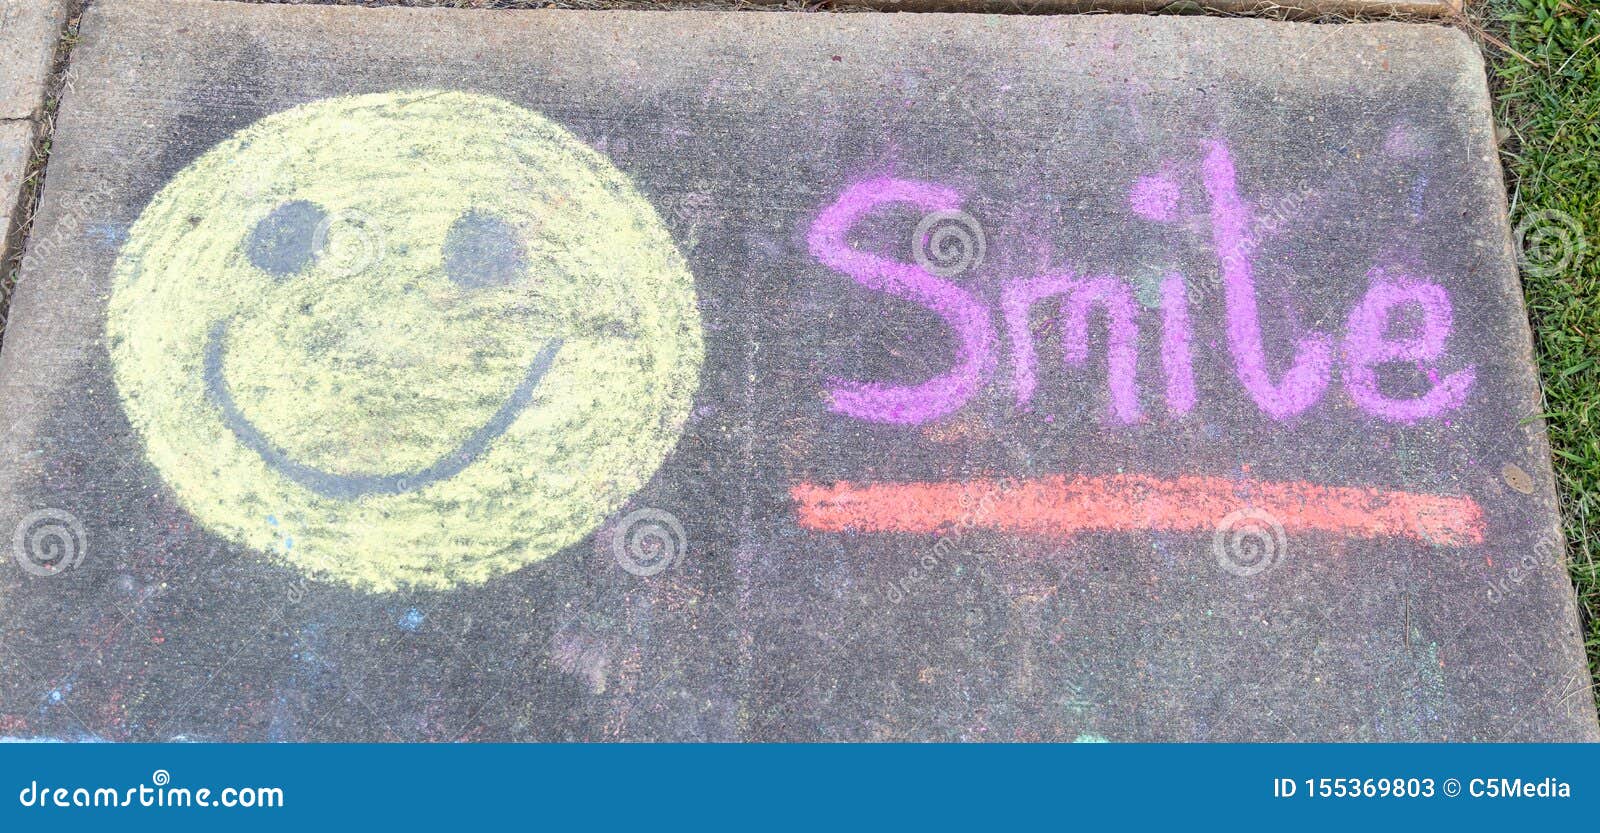 the word smile" and smiley face emoji sidewalk chalk